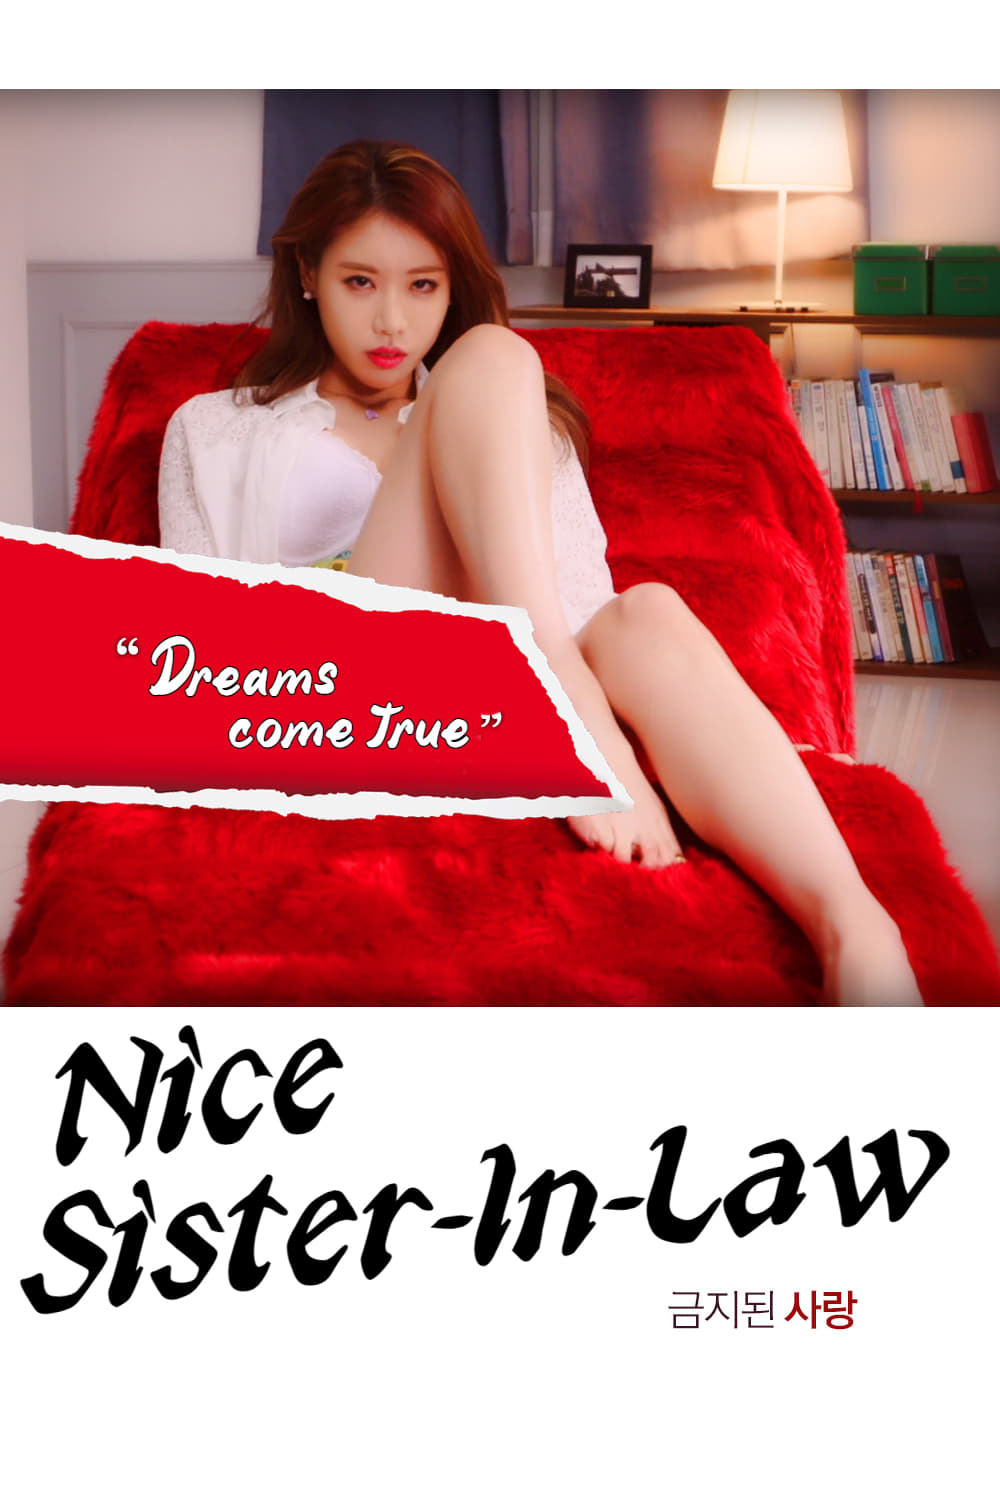 Nice Sister-In-Law (2015)